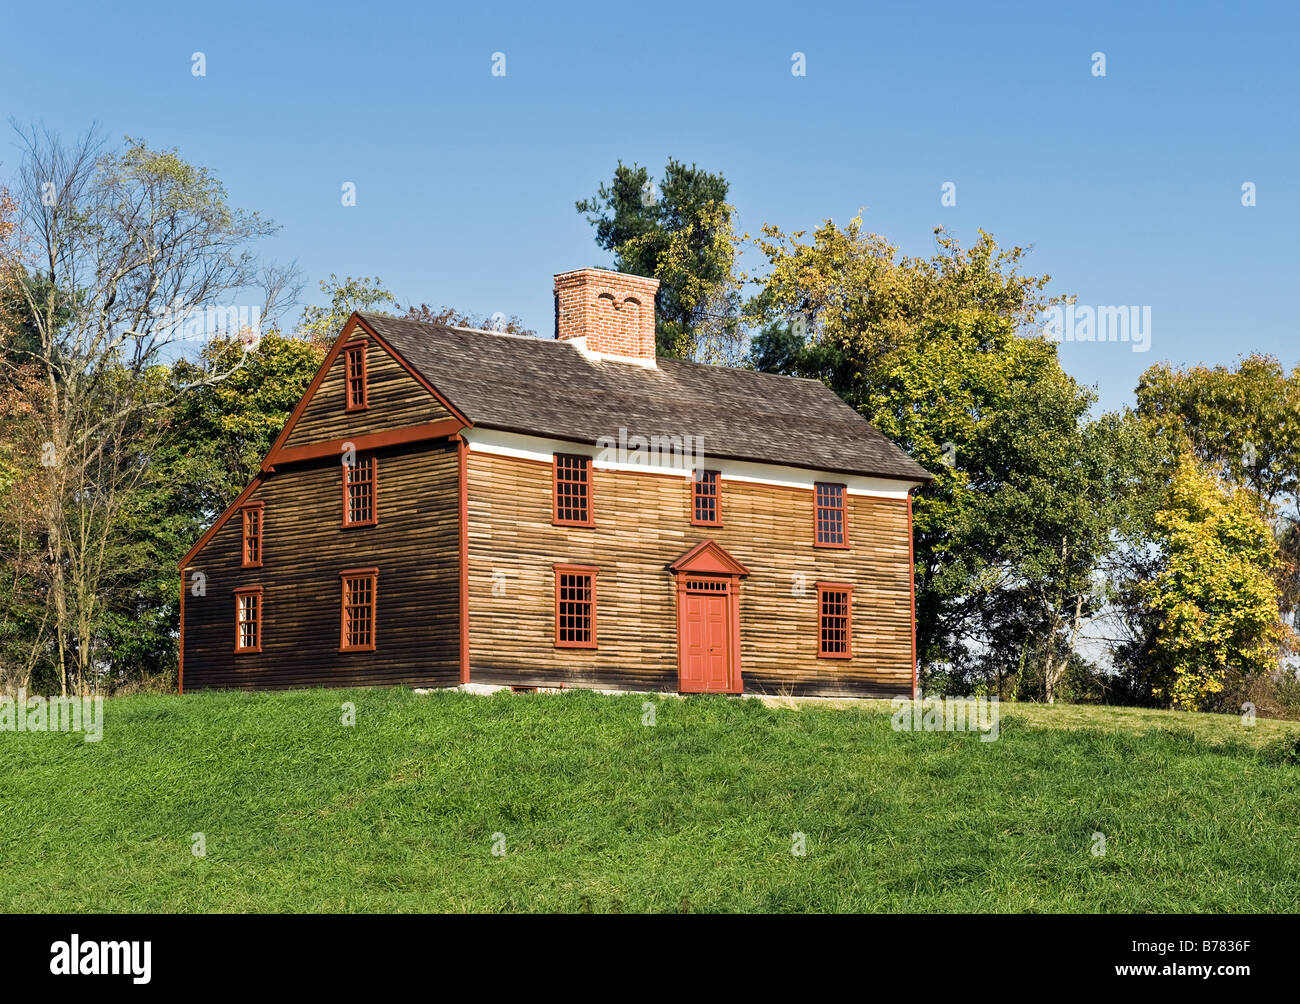 Captain William Smith House Battle Road Trail zwischen Lexington und Concord Minute Man National Historical Park ma Usa Stockfoto